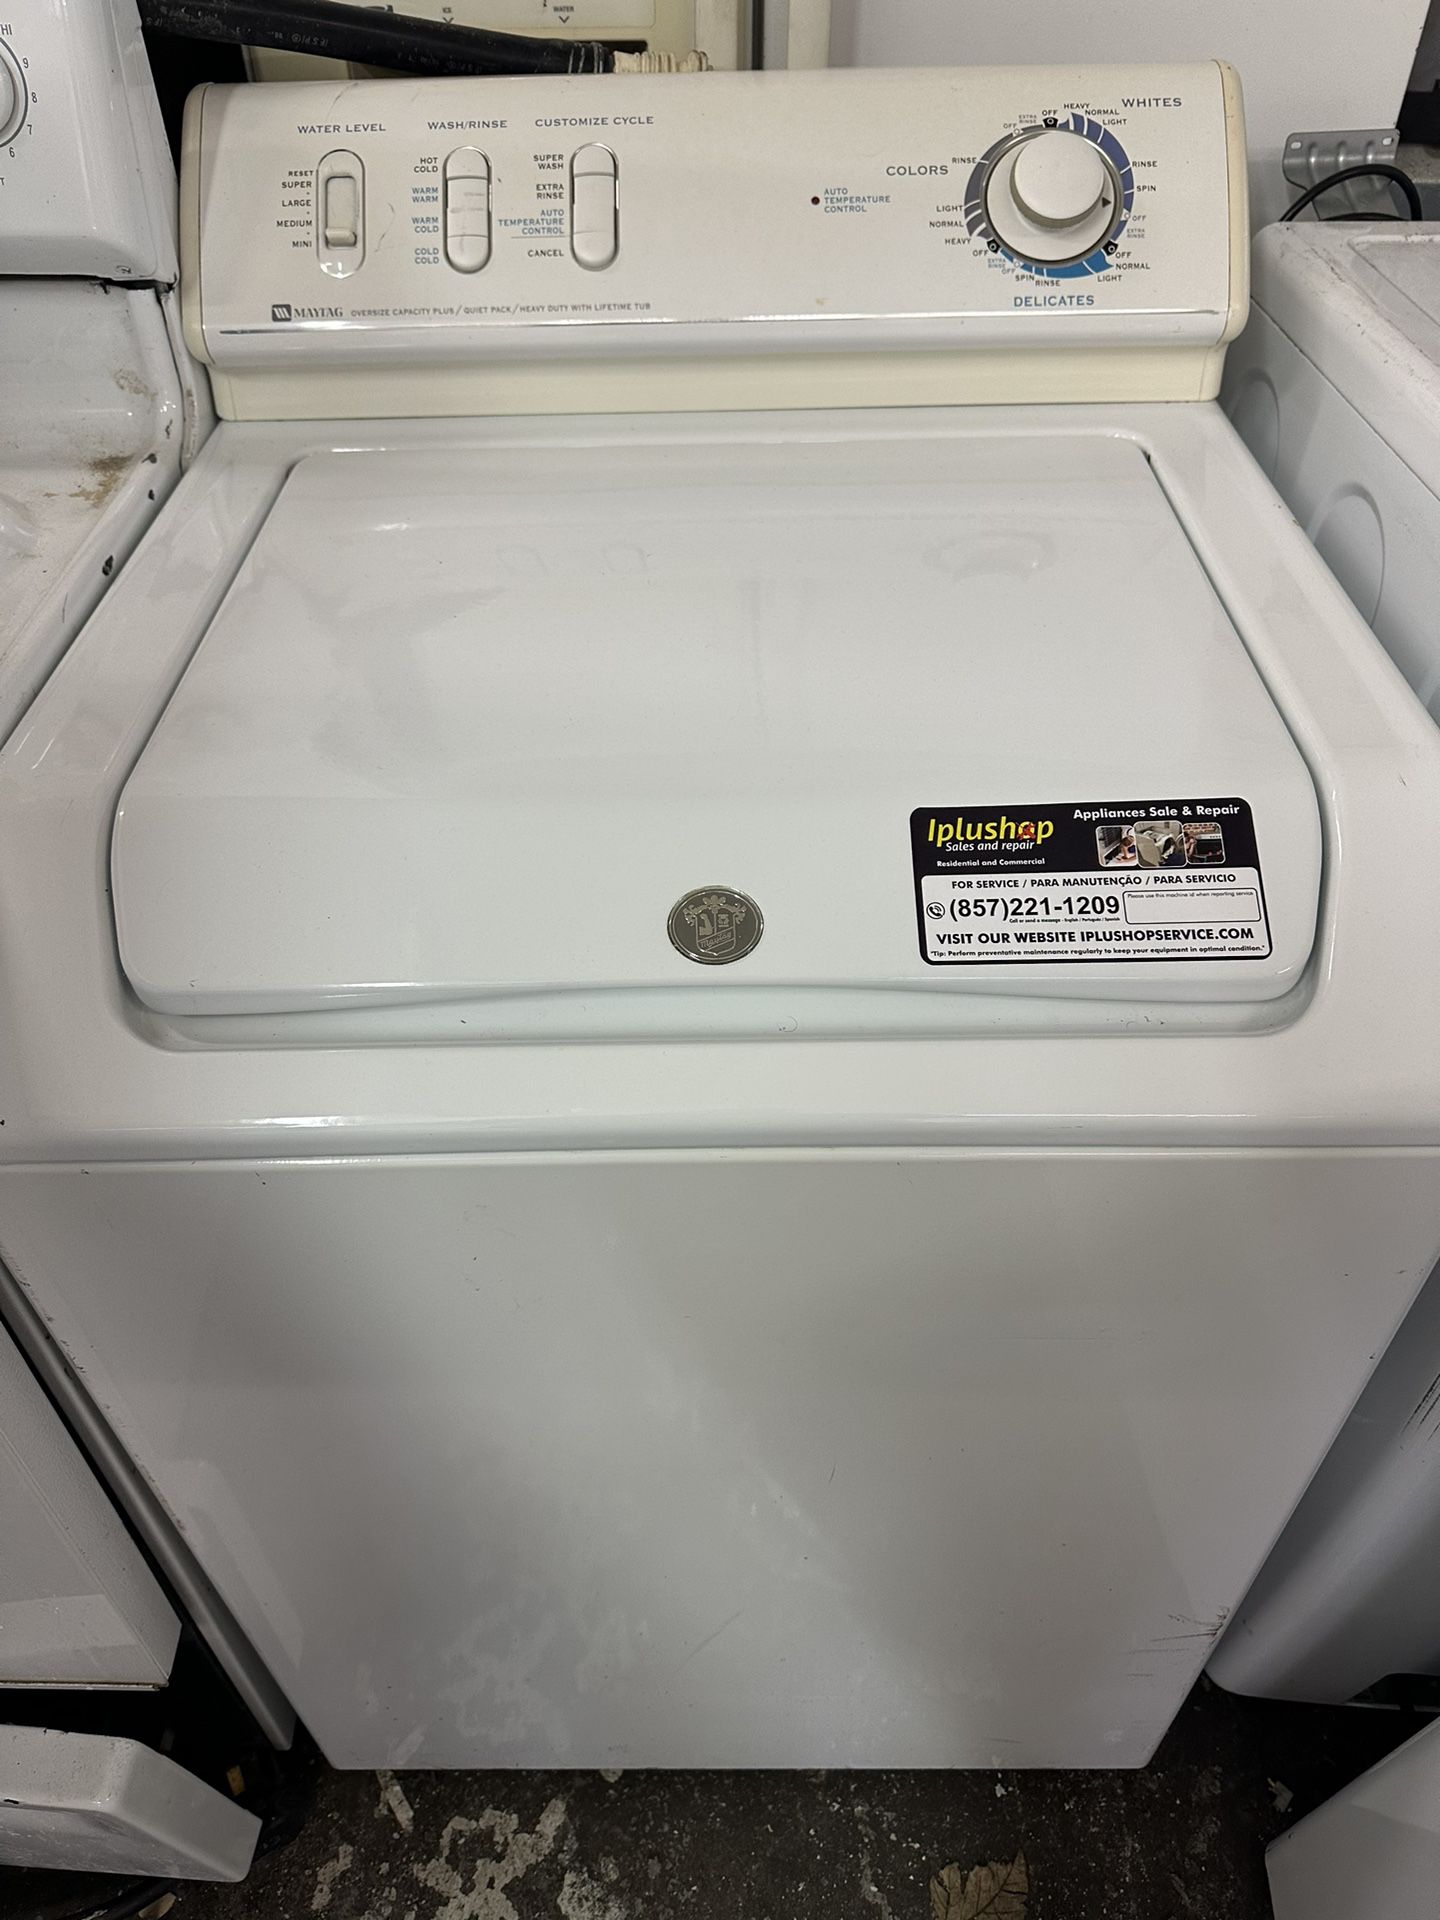 washing machine in excellent working order. iplushop guarantee